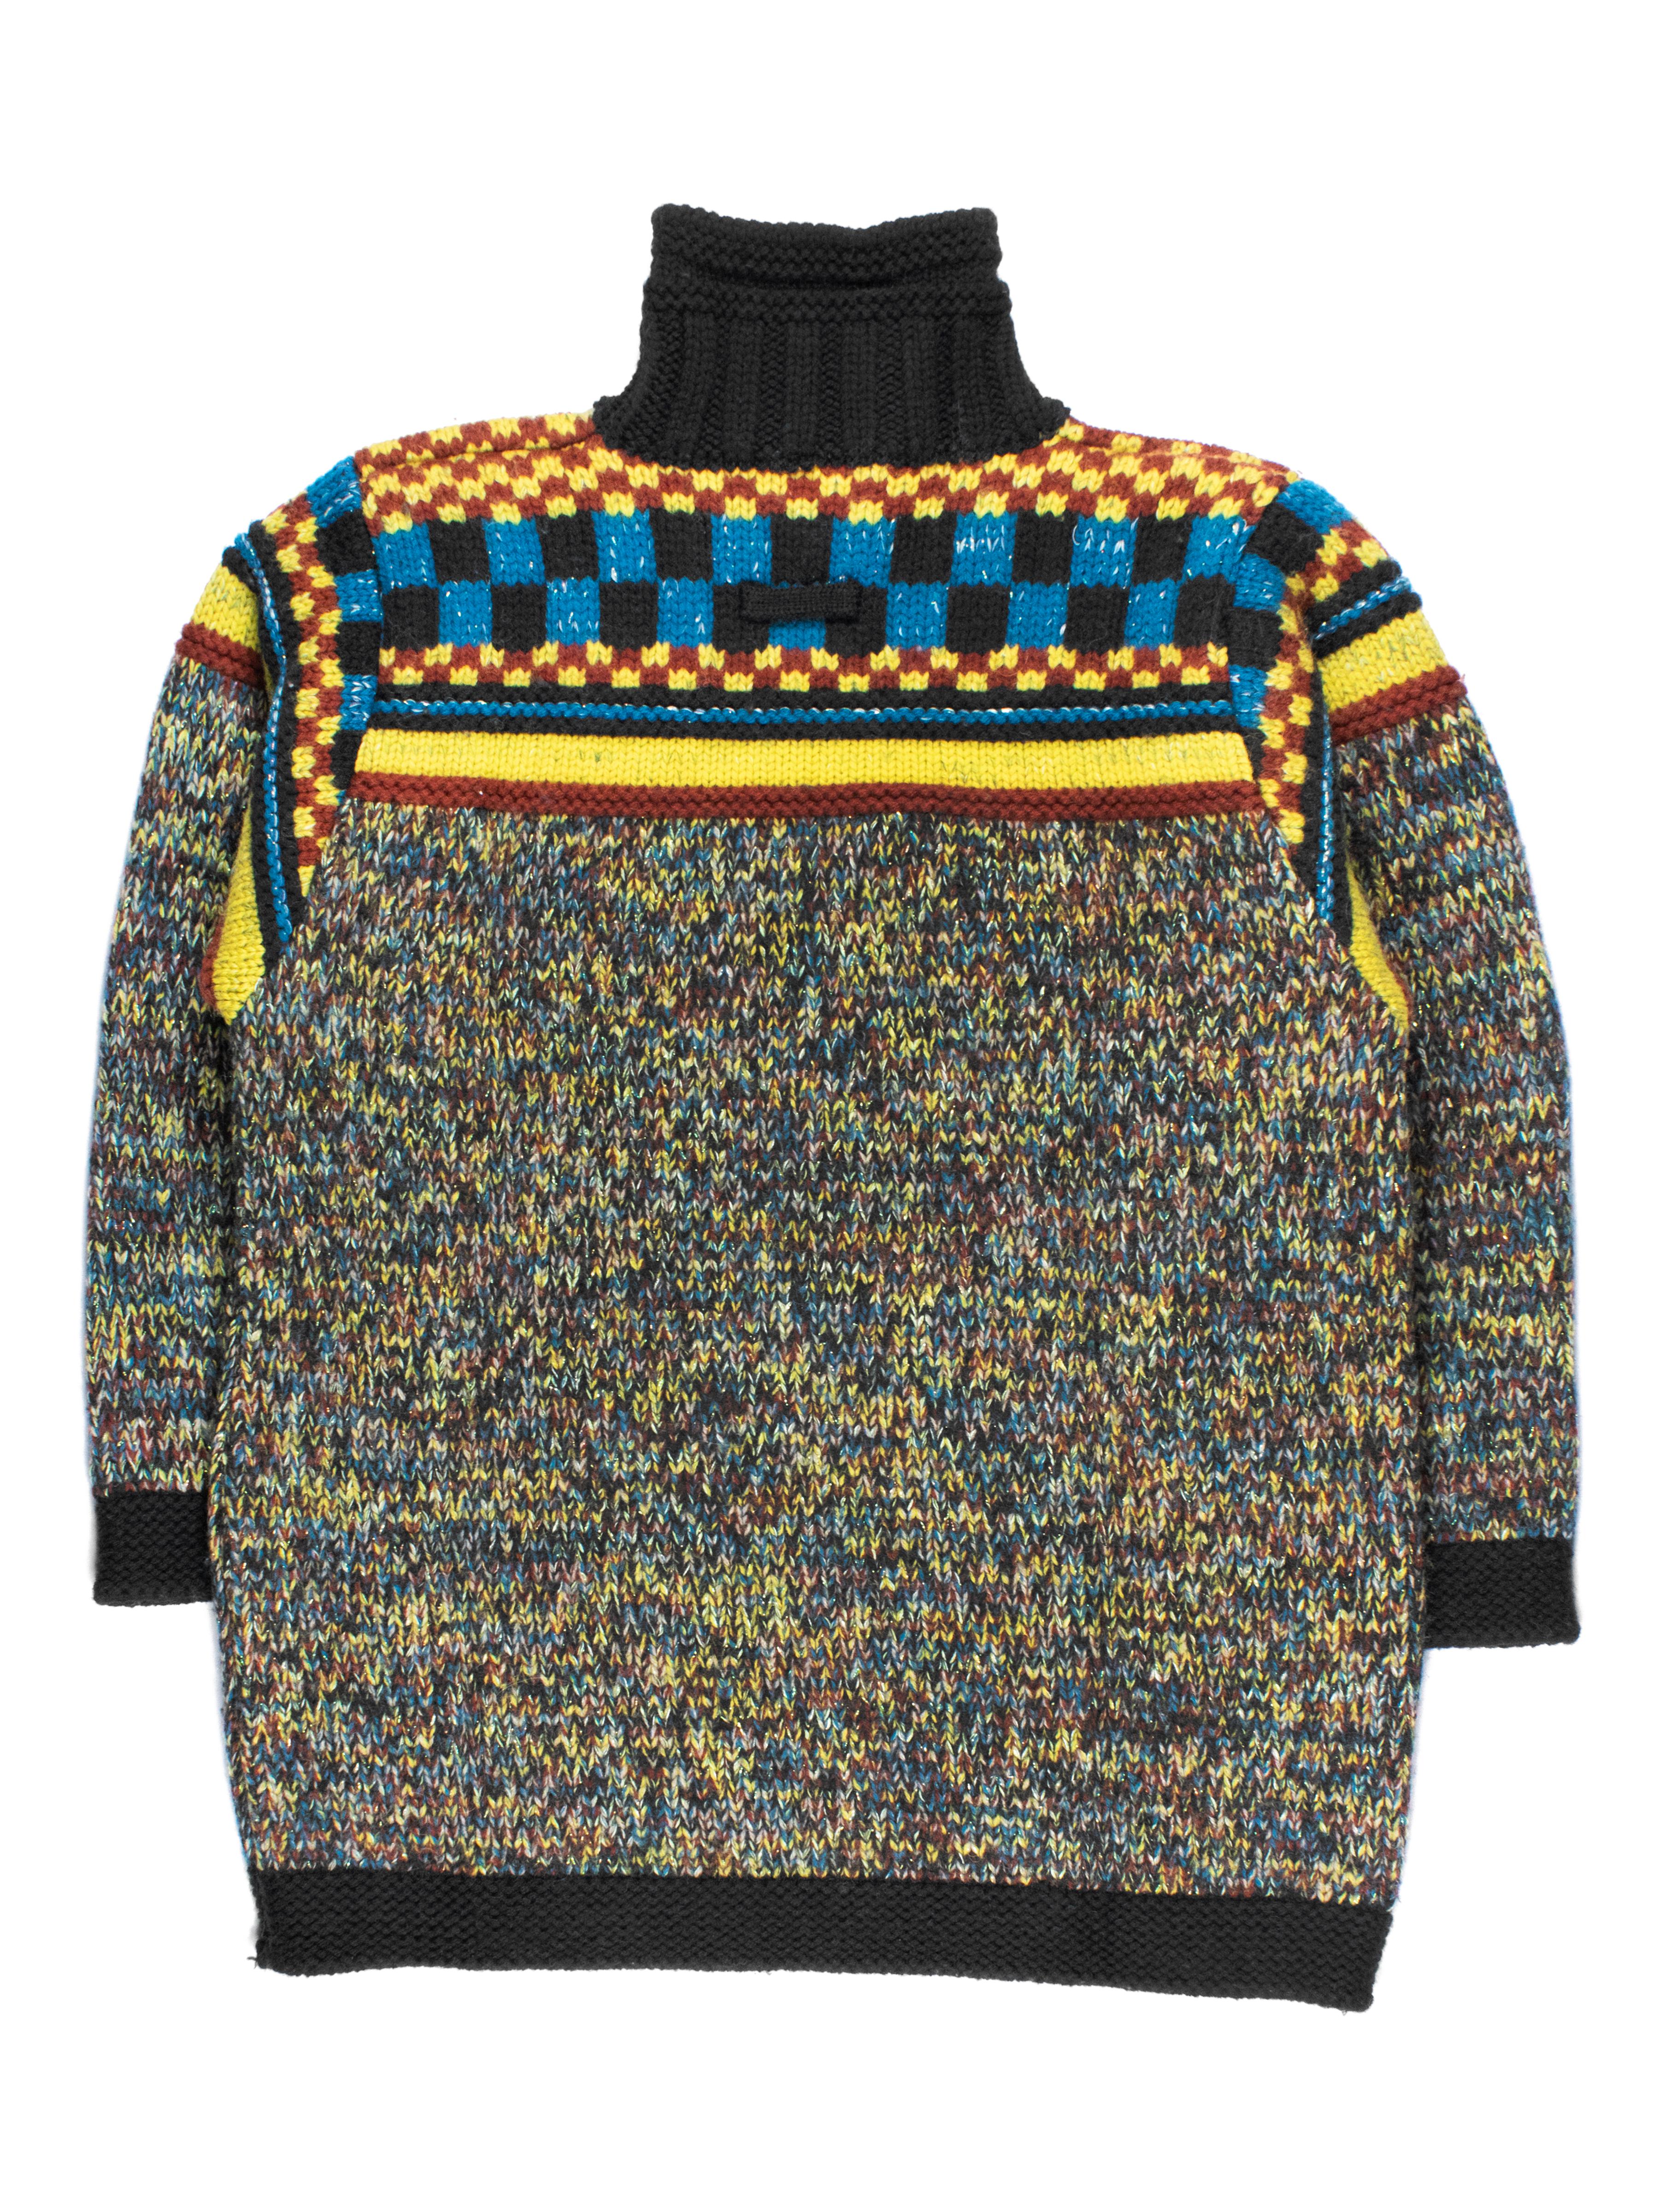 jean paul gaultier aw1995 circuit board sweater